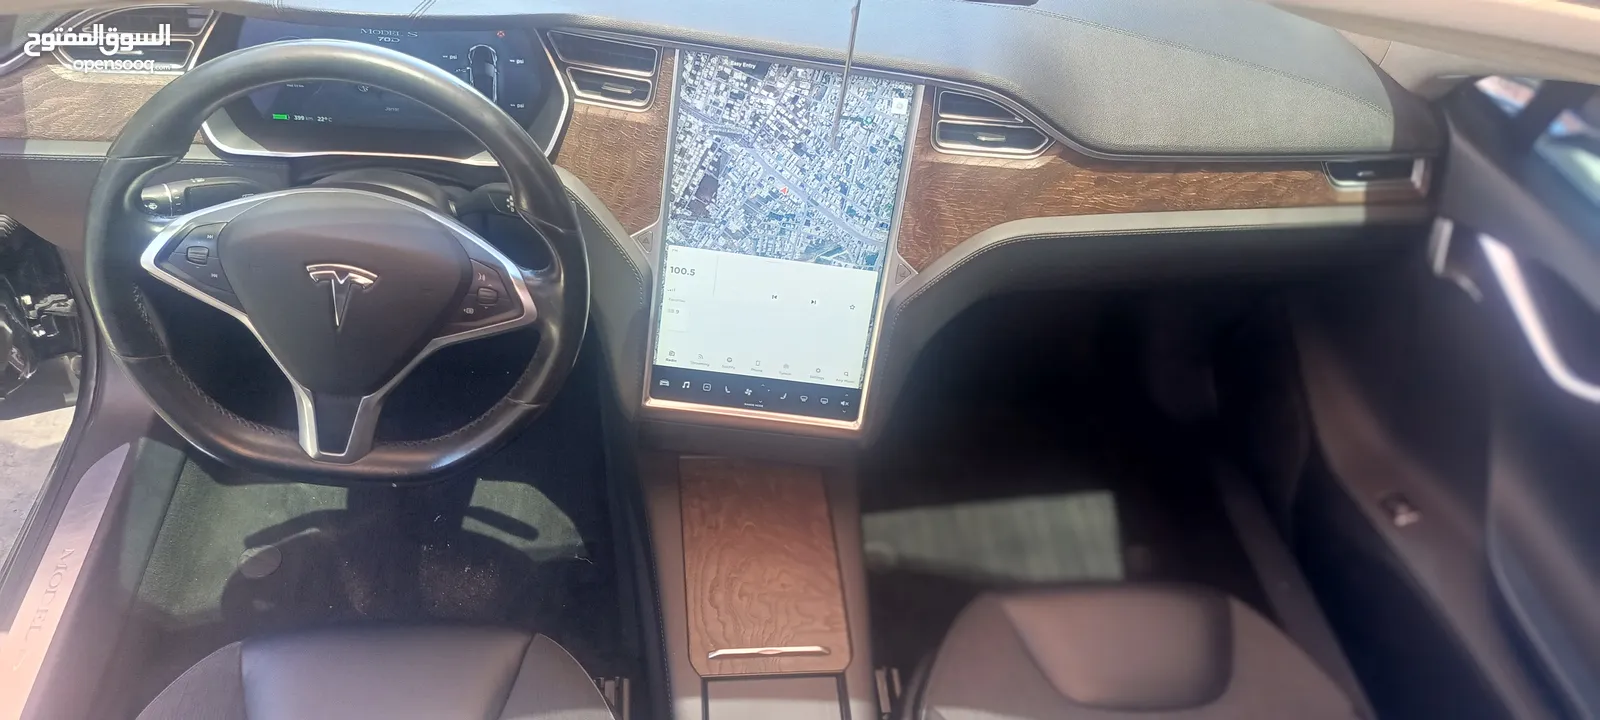 تيسلا موديل Tesla model S 2015 نظيفة جدا مميزة